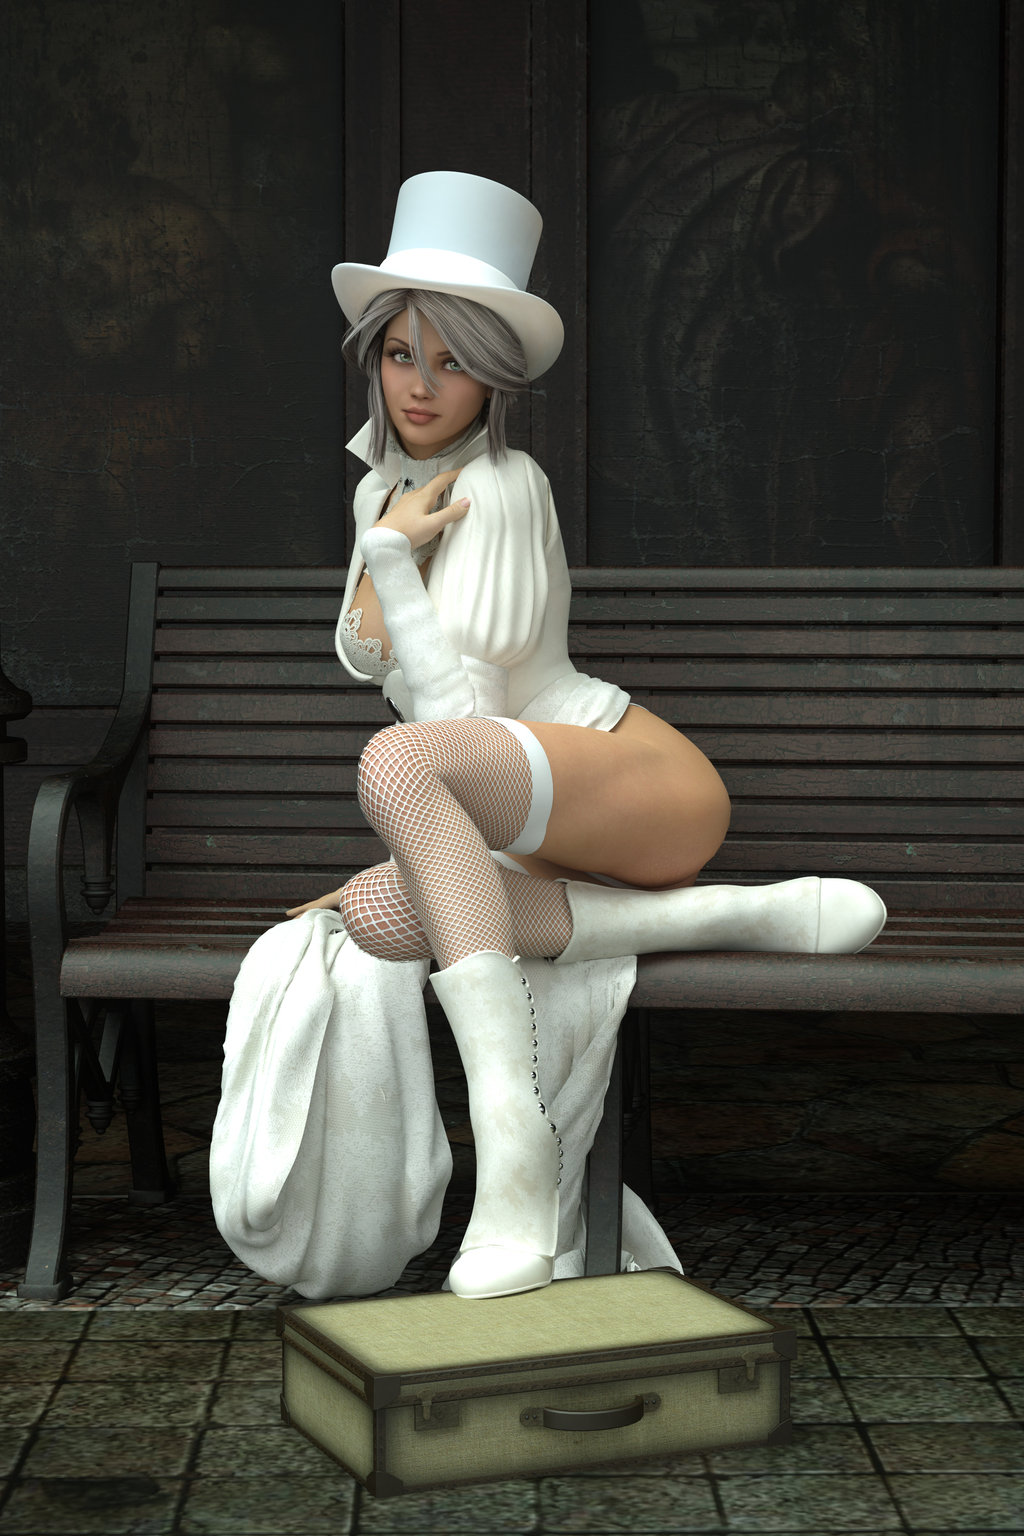 General 1024x1536 RGUS CGI women hat white clothing lace fishnet suitcase bench silver hair